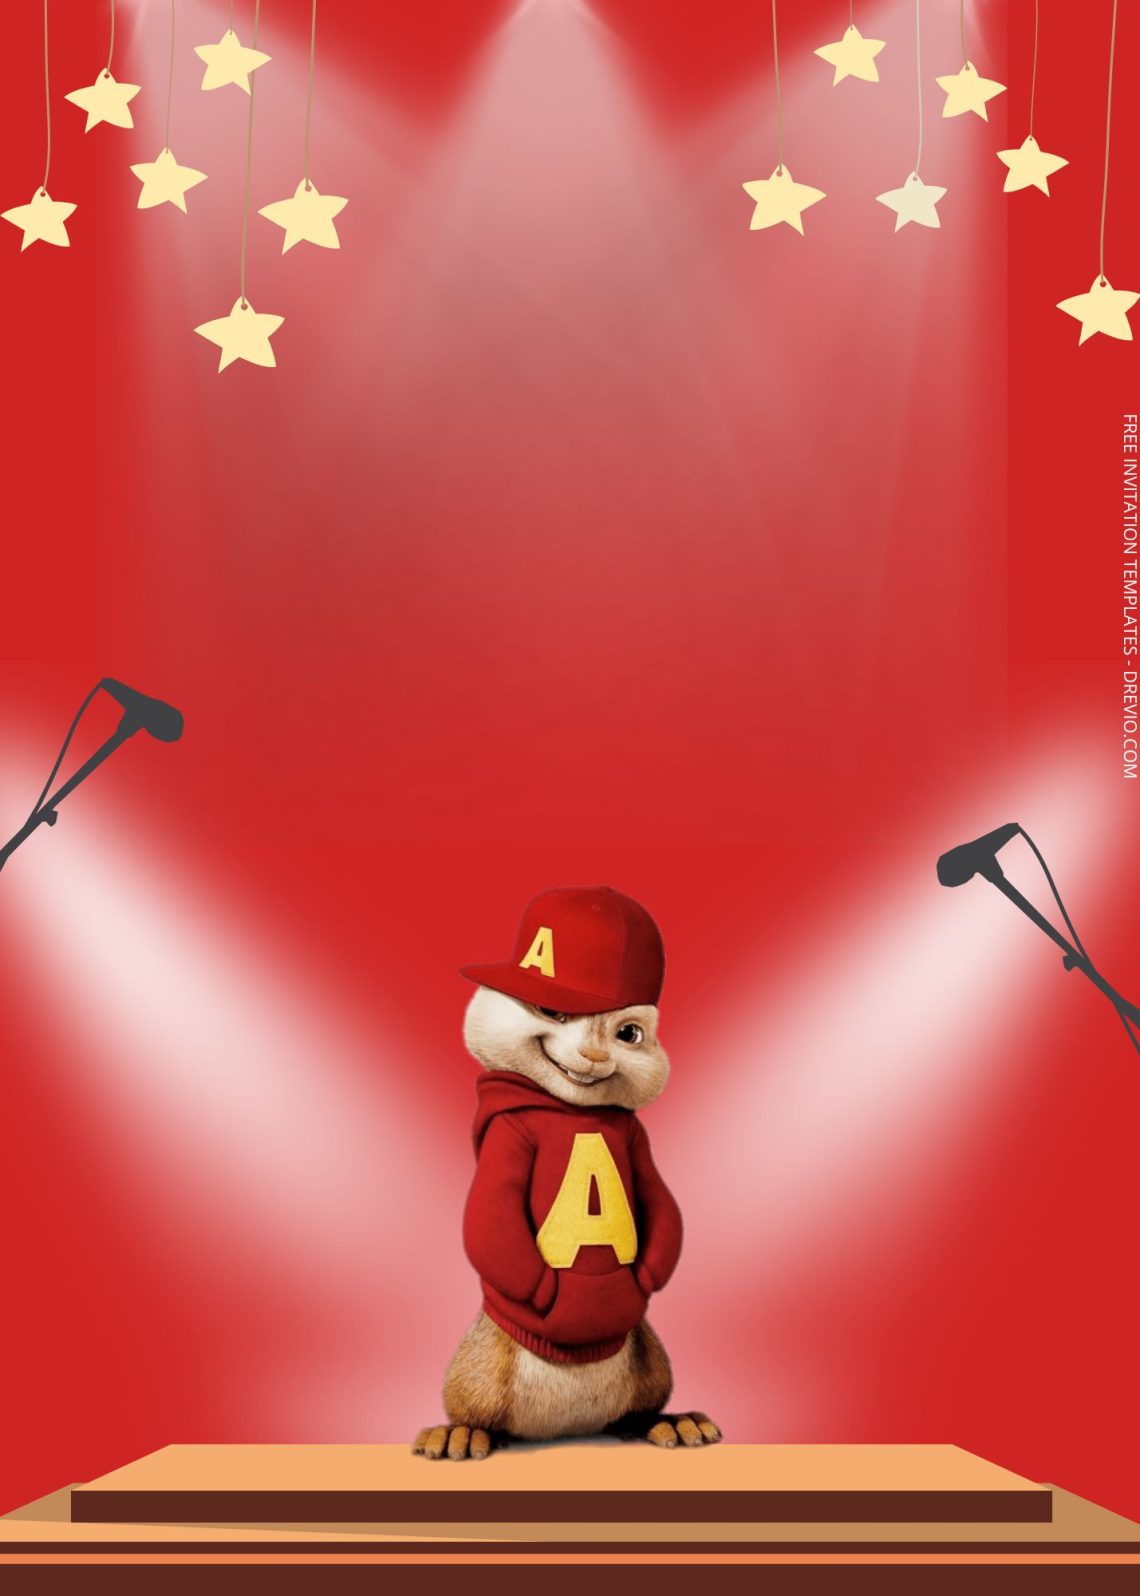 FREE Alvin & The Chipmunks Birthday Invitation Templates